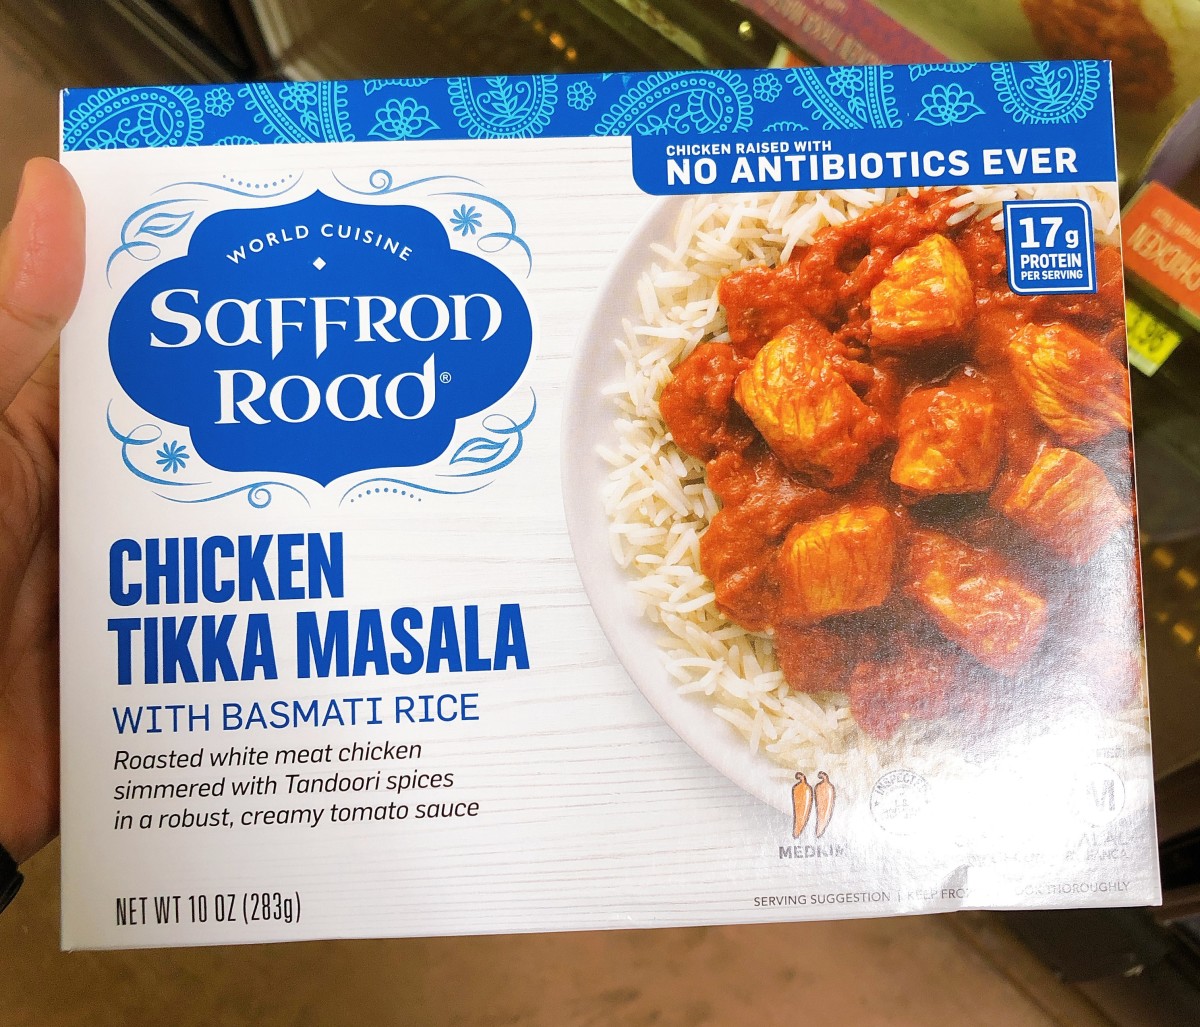 The chicken tikka masala.